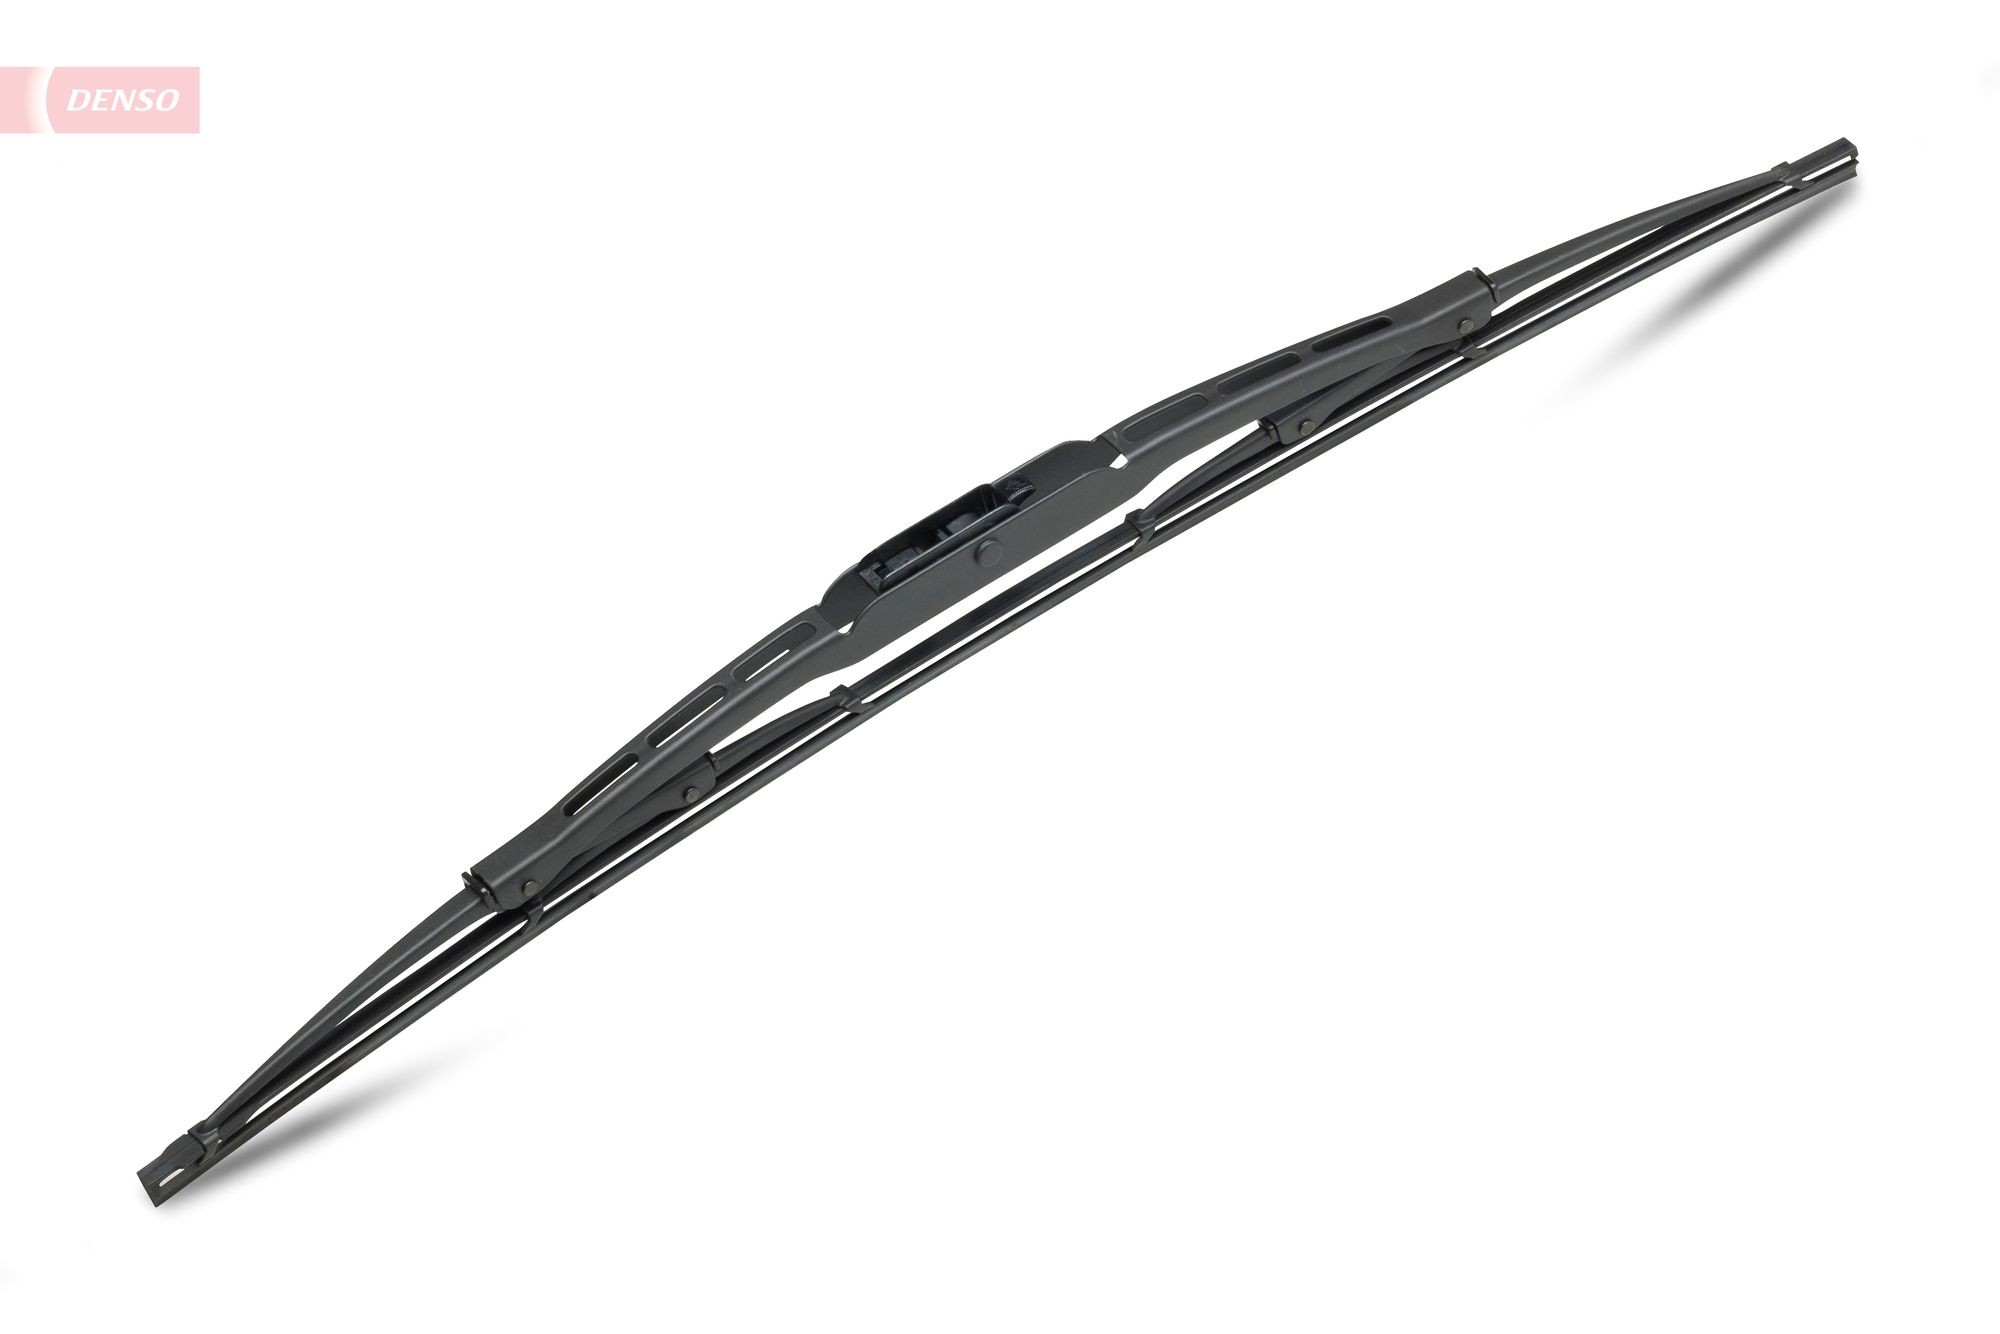 DENSO Standard 480 mm, Standard, arched, 19 Inch Wiper blades DM-648 buy